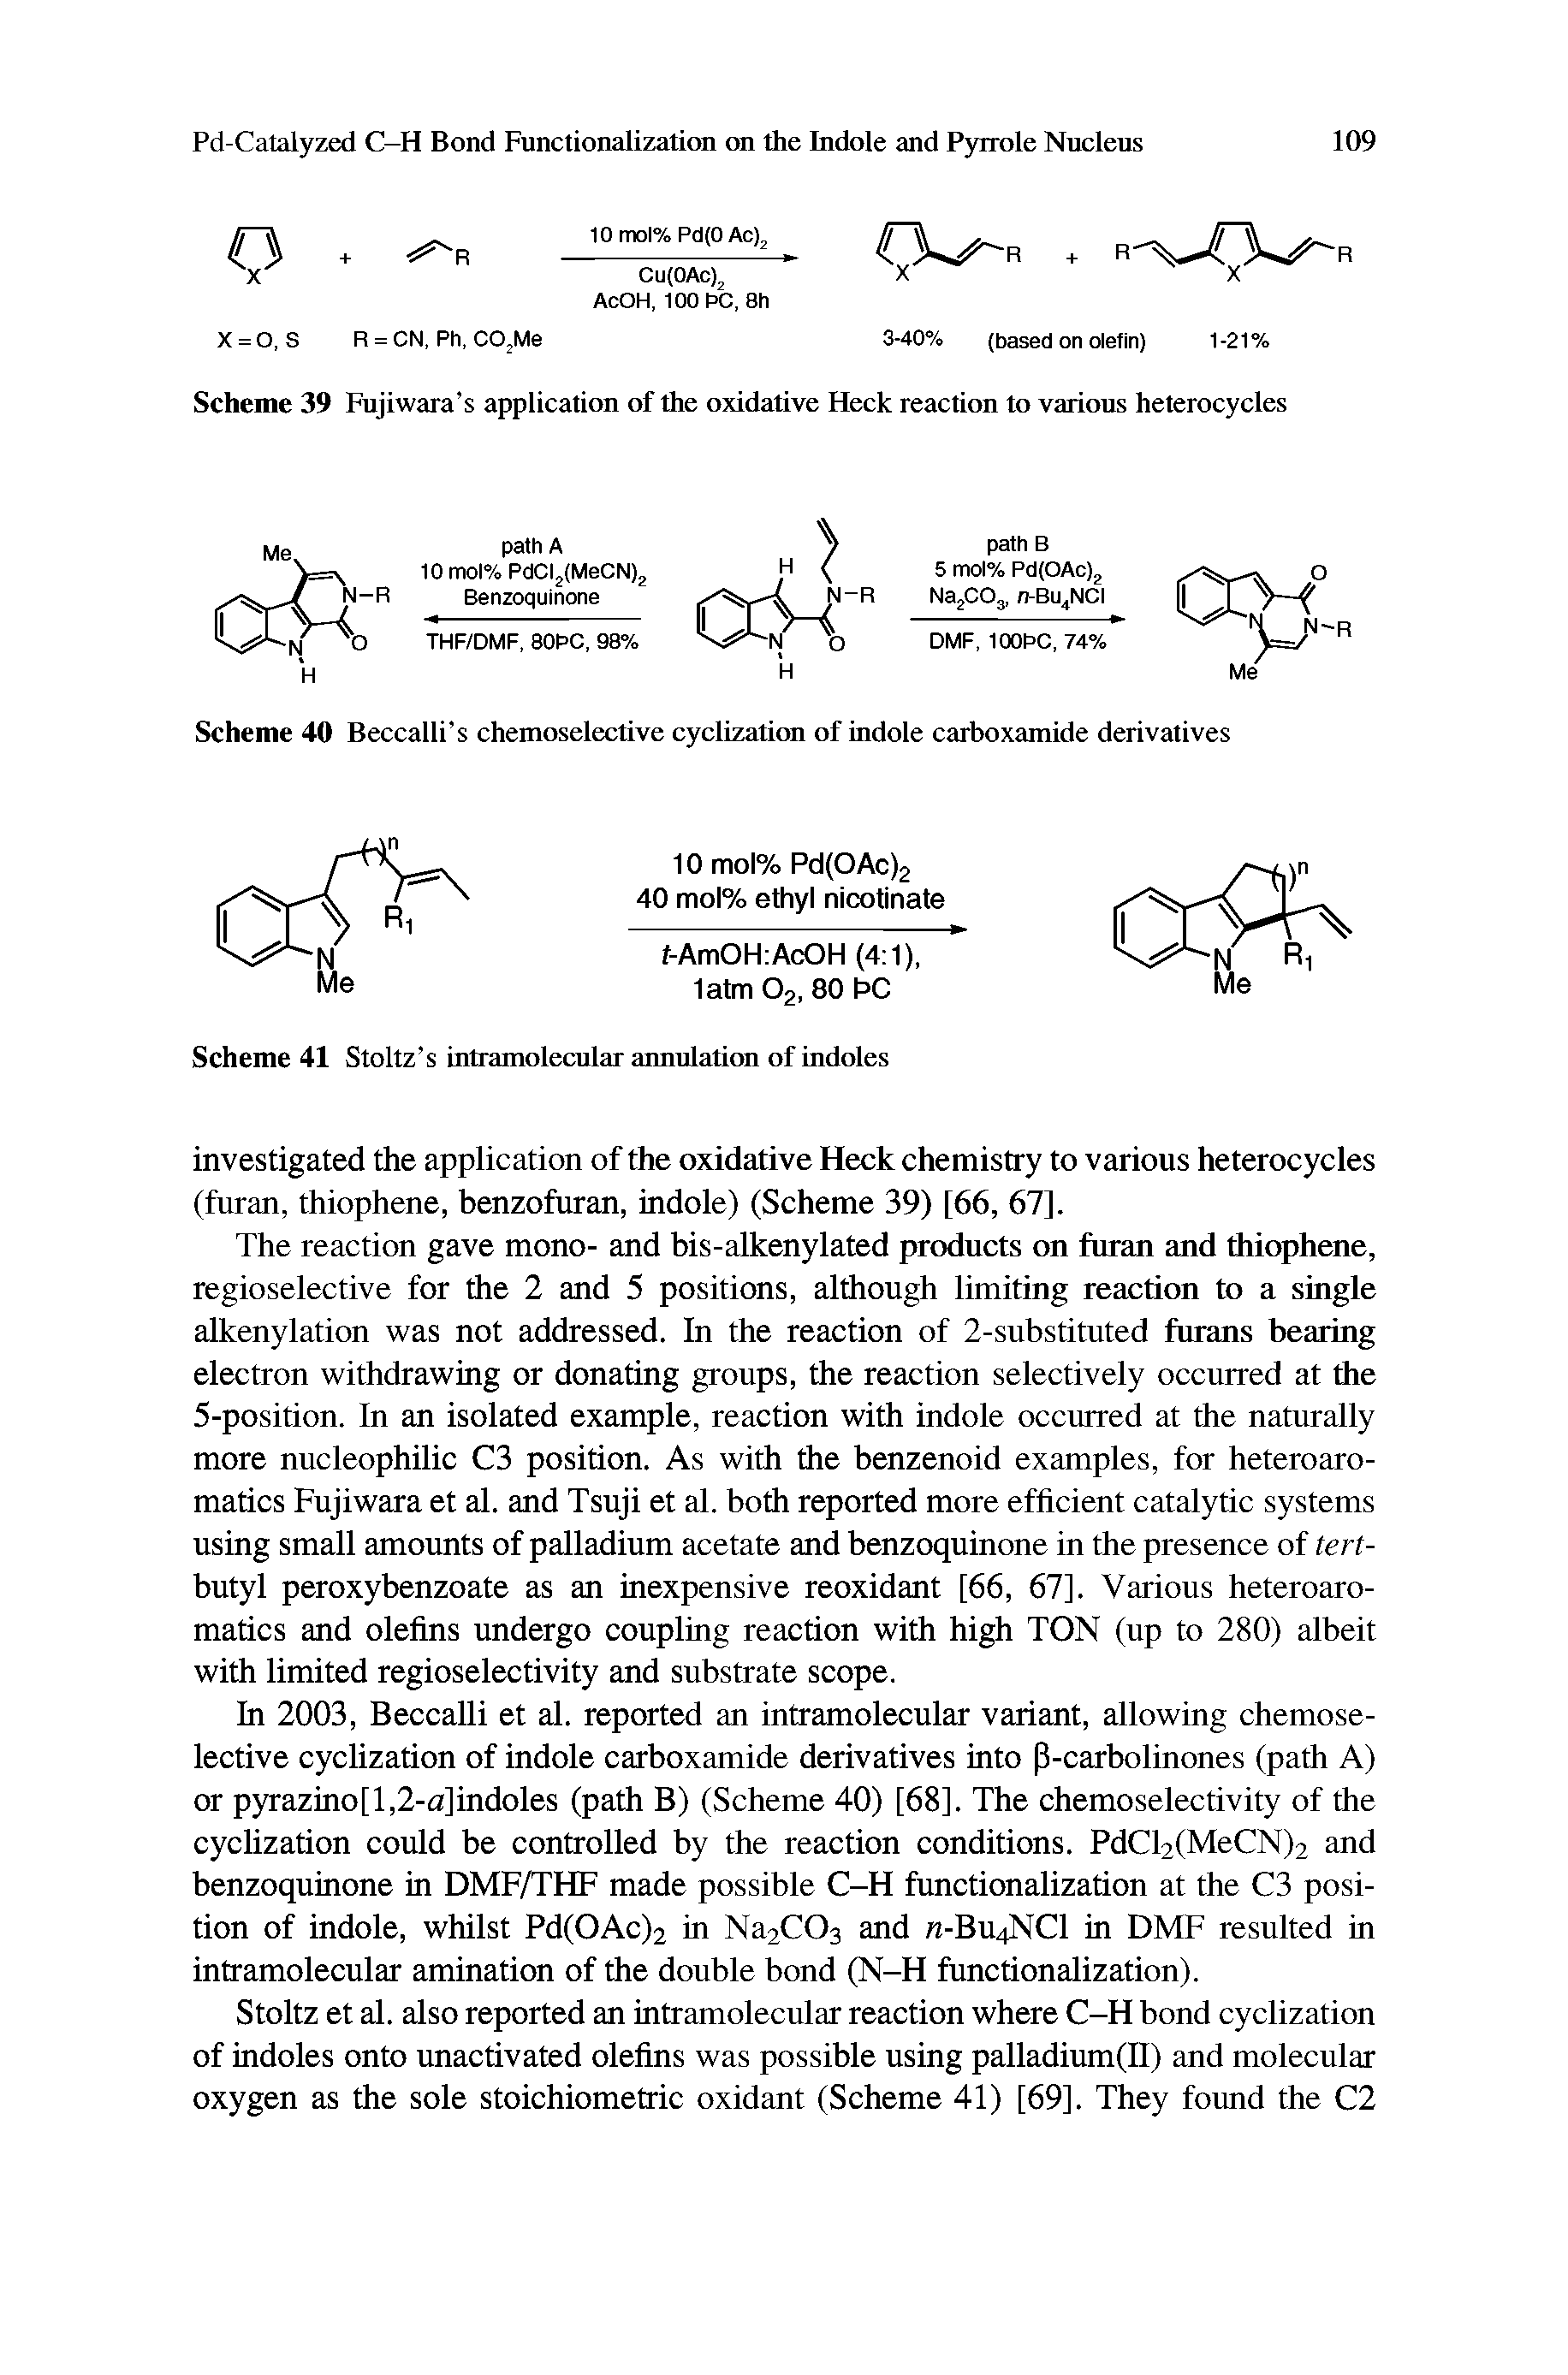 Scheme 39 Fujiwara s application of the oxidative Heck reaction to various heterocycles...